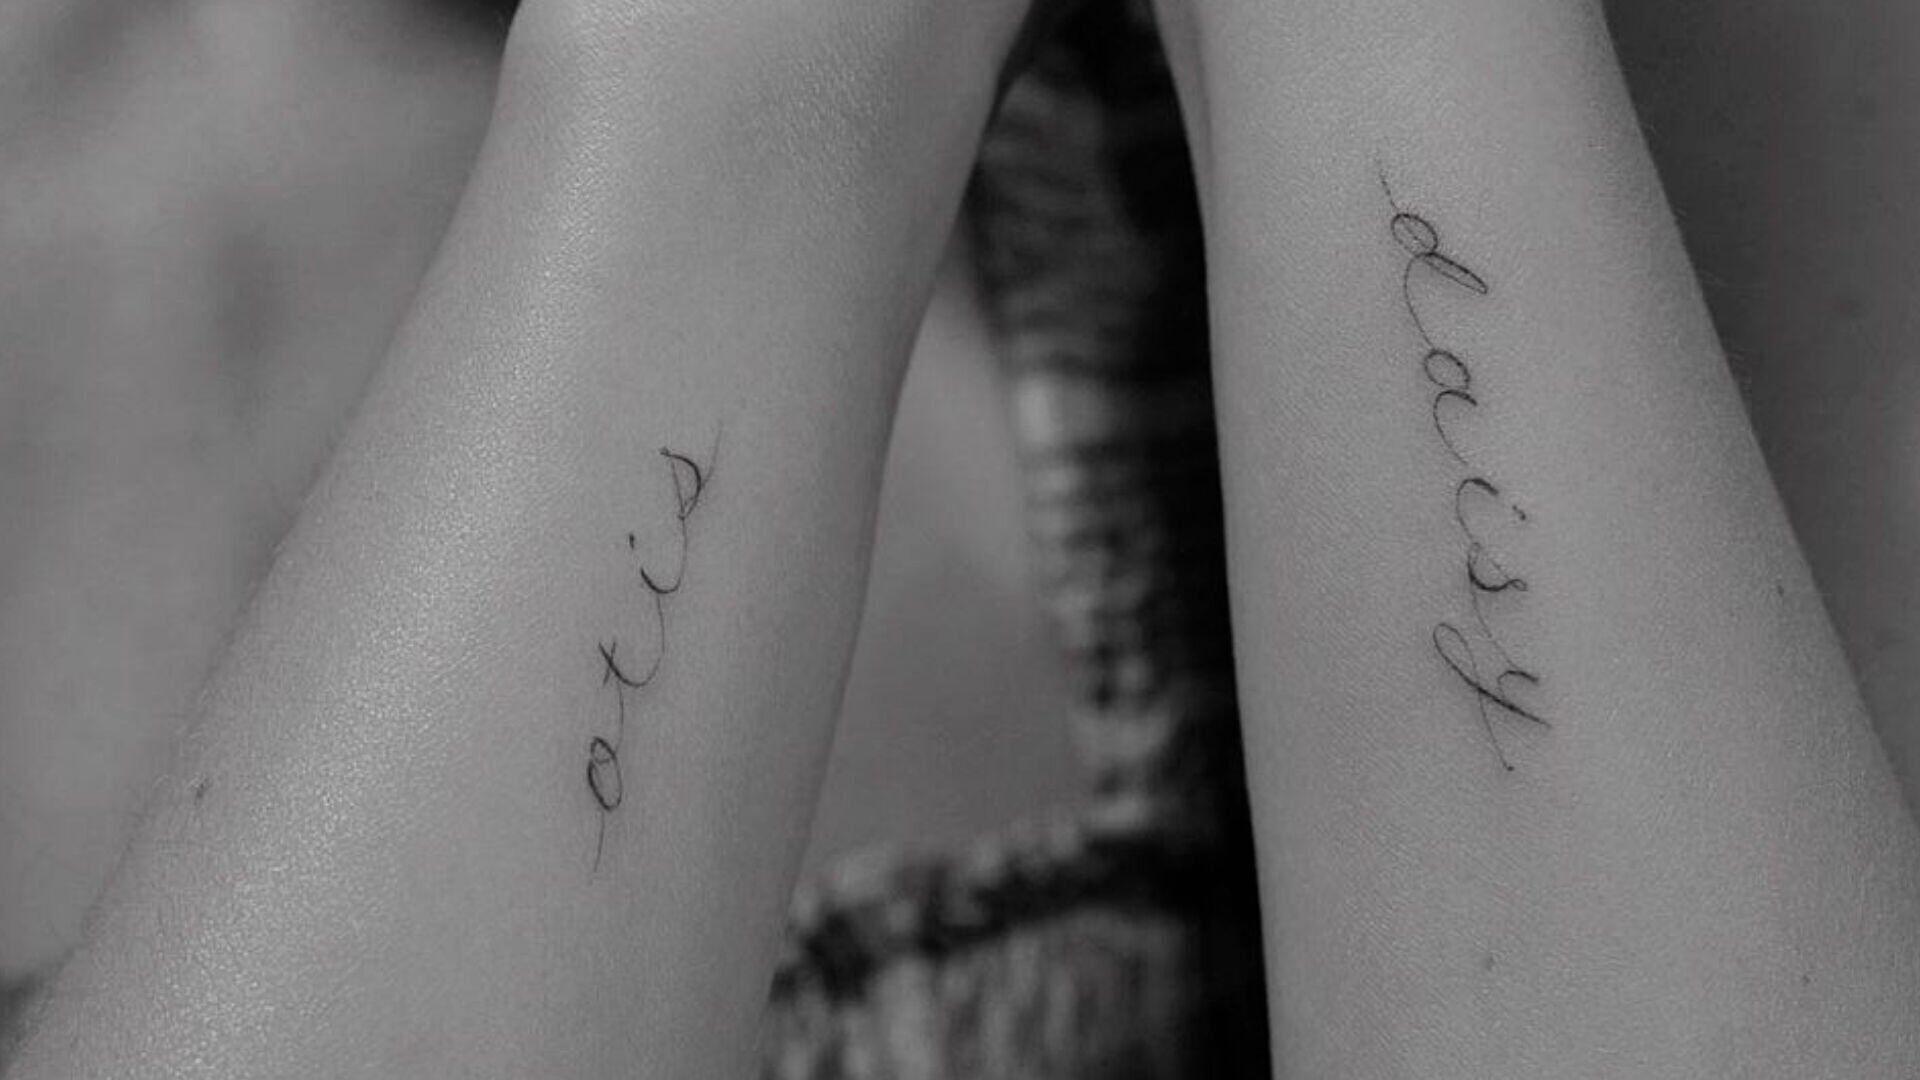 Olivia Wilde unveils tattoos dedicated to two children